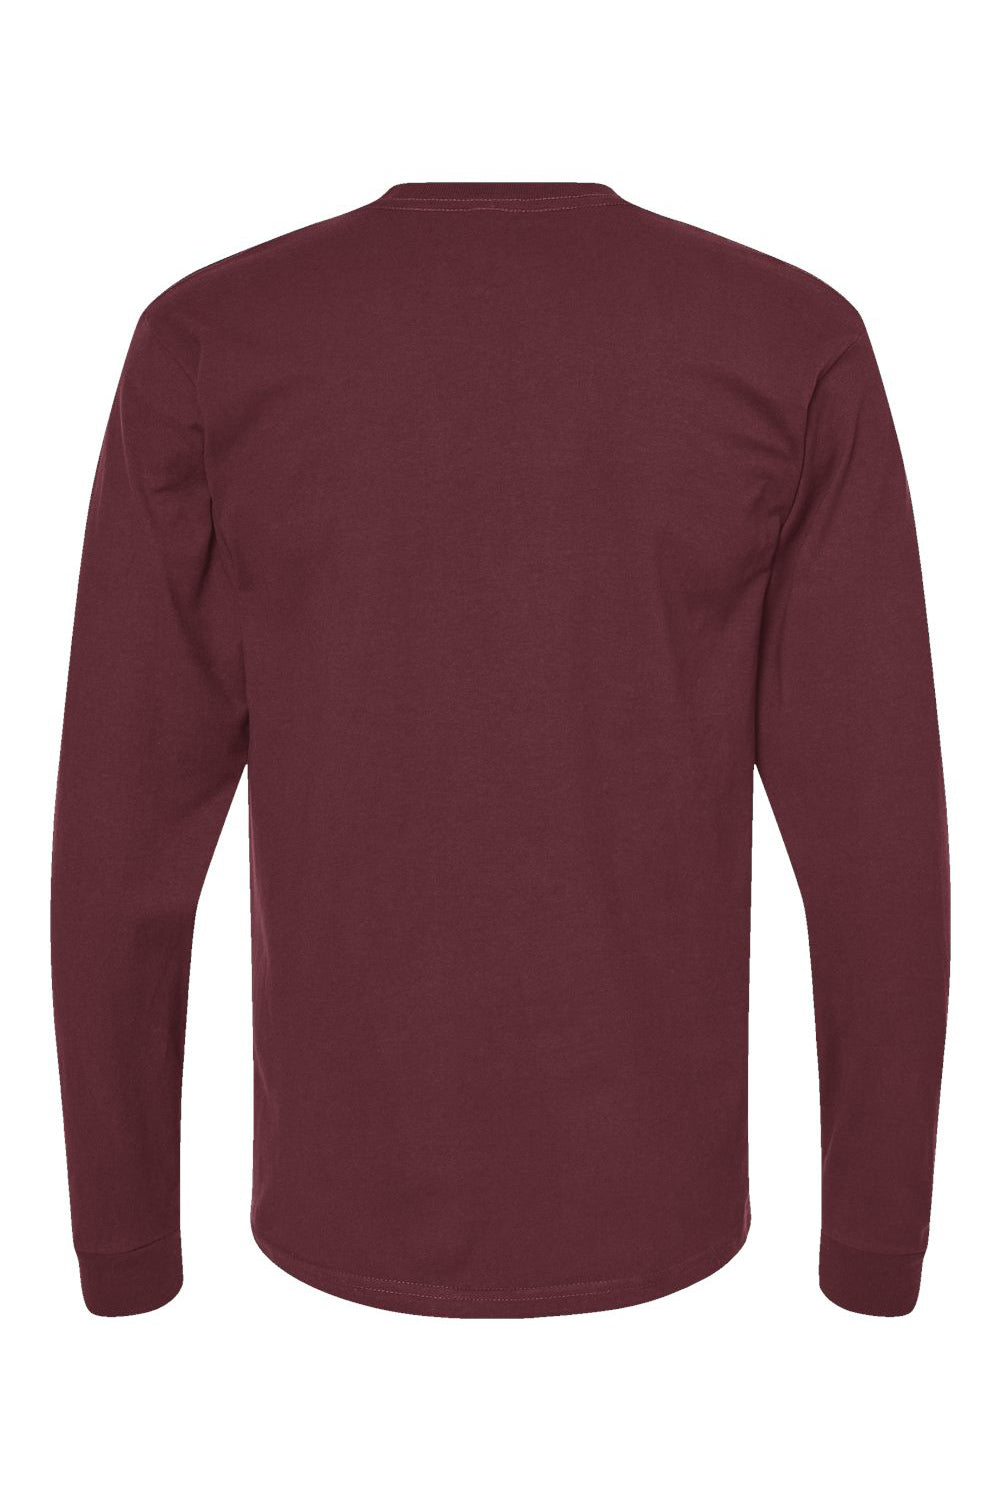 Tultex 291 Mens Jersey Long Sleeve Crewneck T-Shirt Burgundy Flat Back